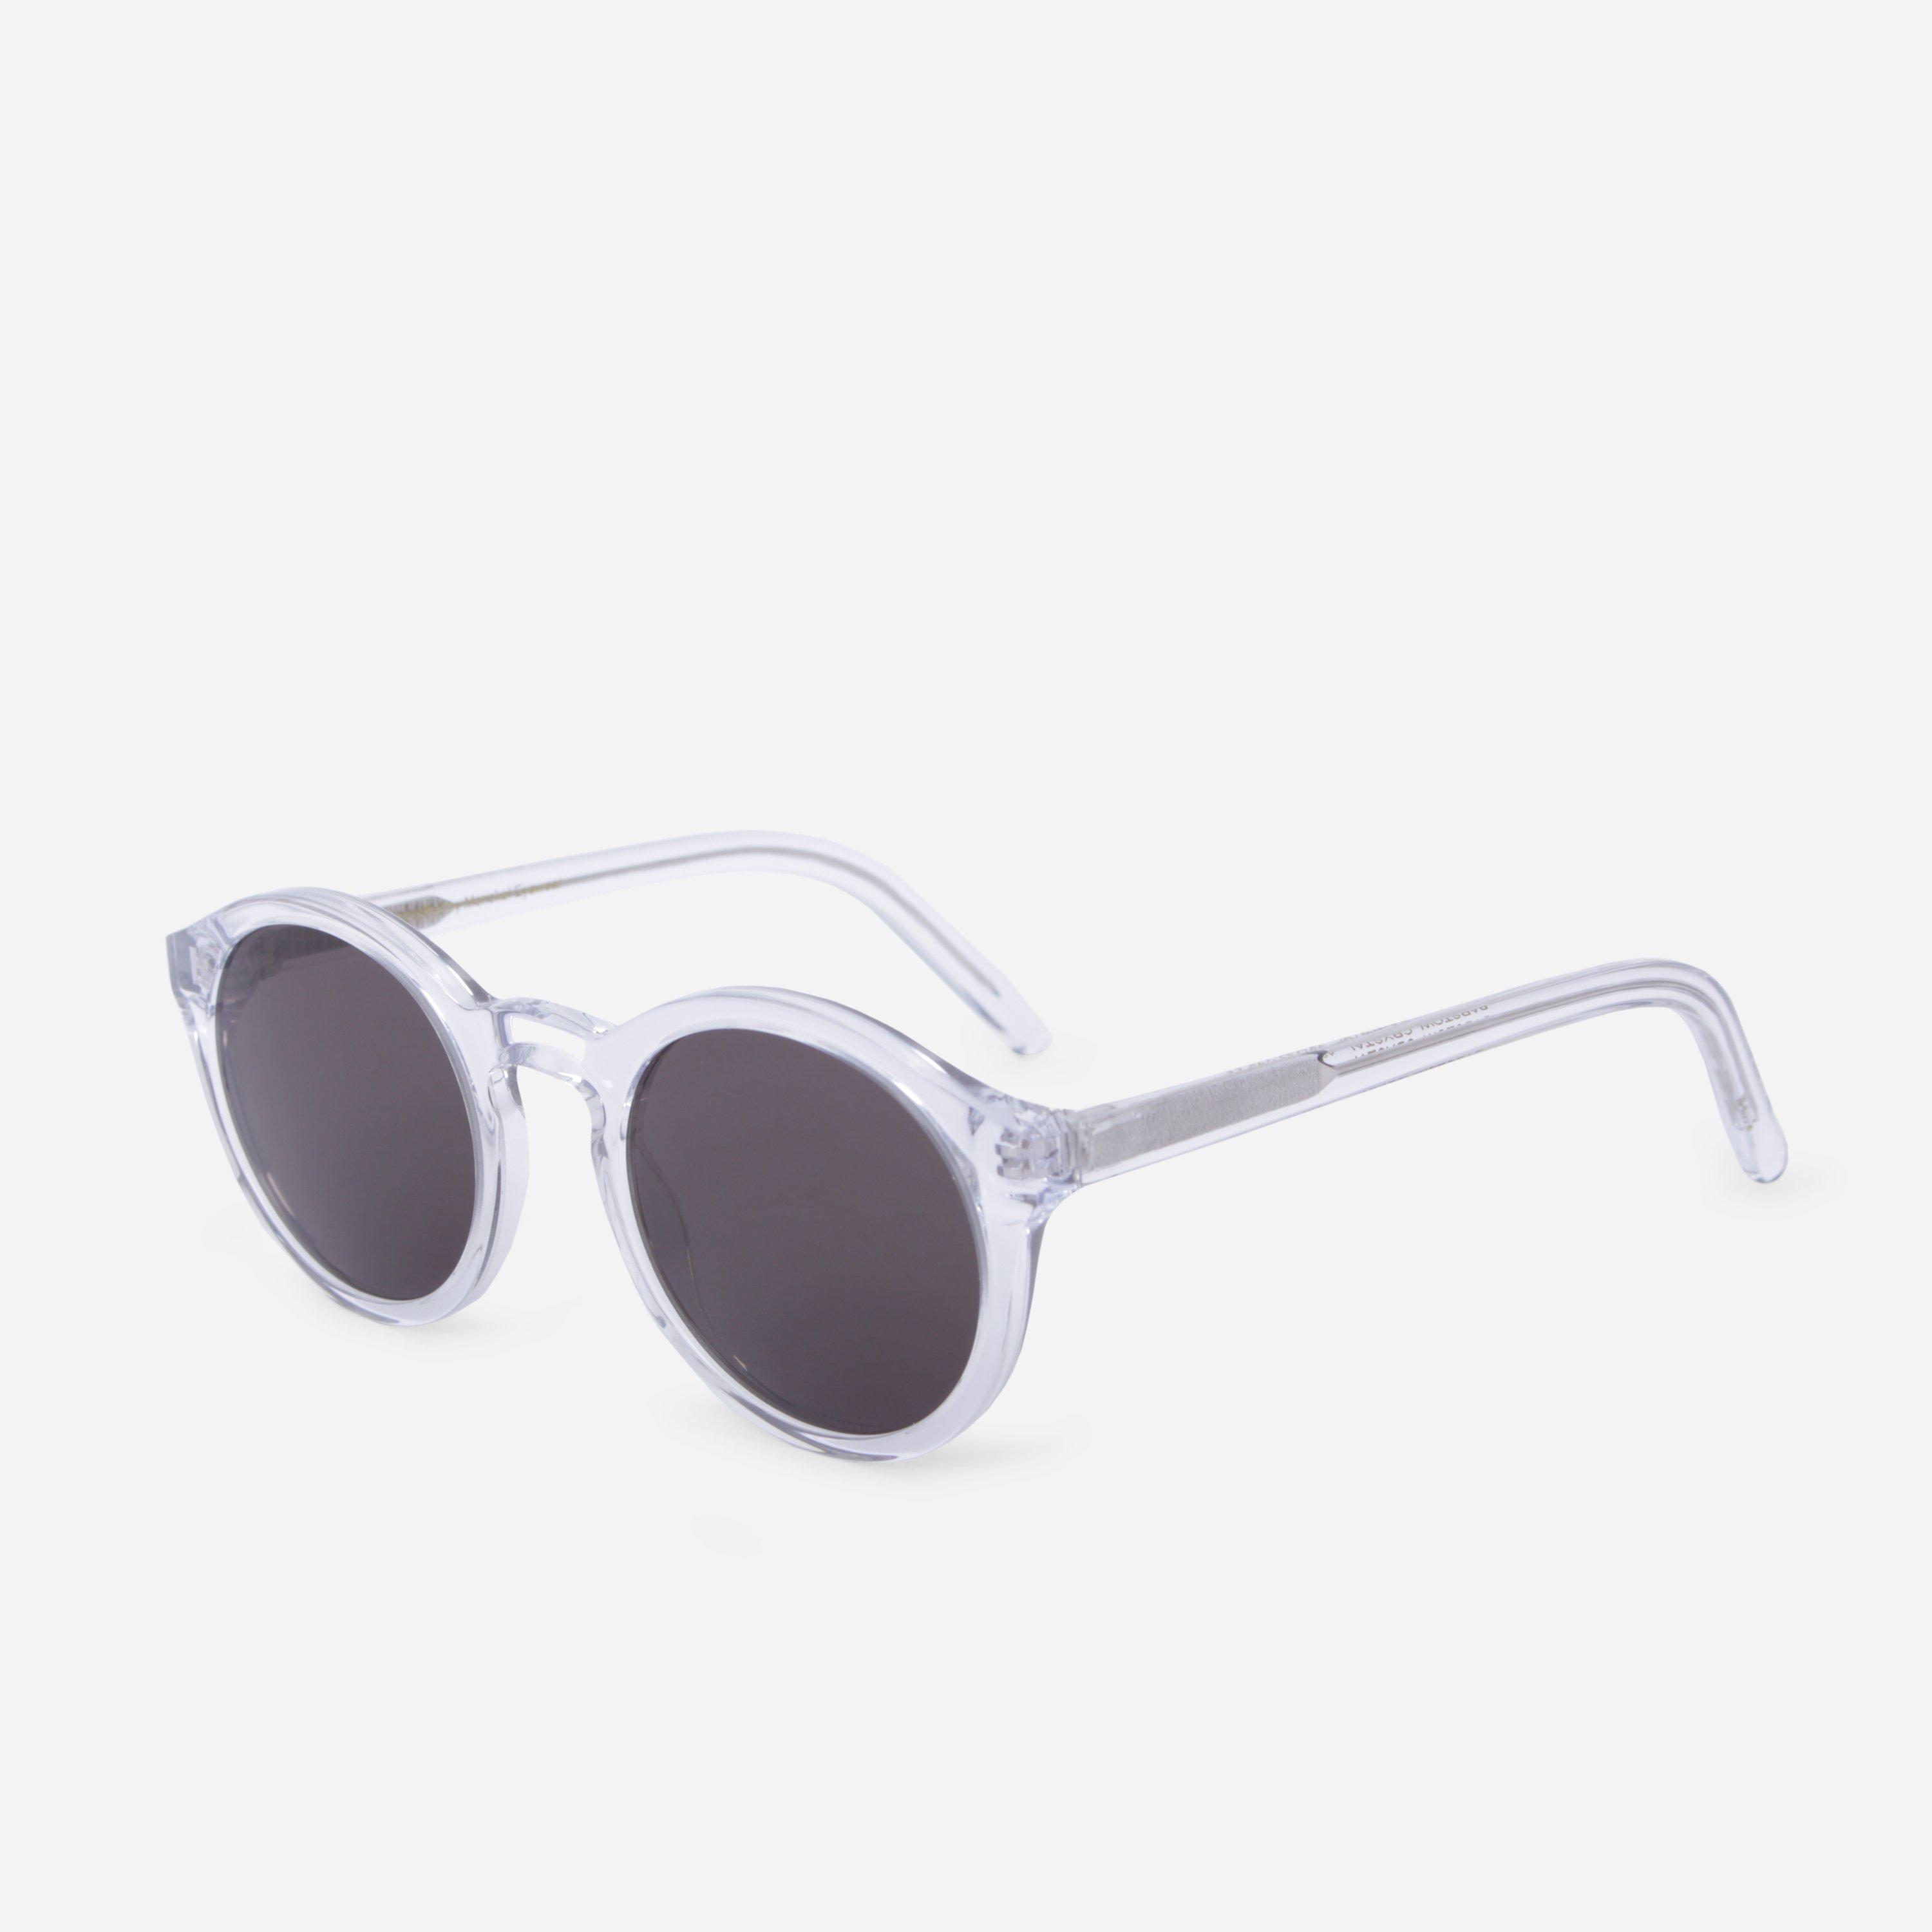 Monokel Eyewear Barstow Sunglasses for Men - Lyst